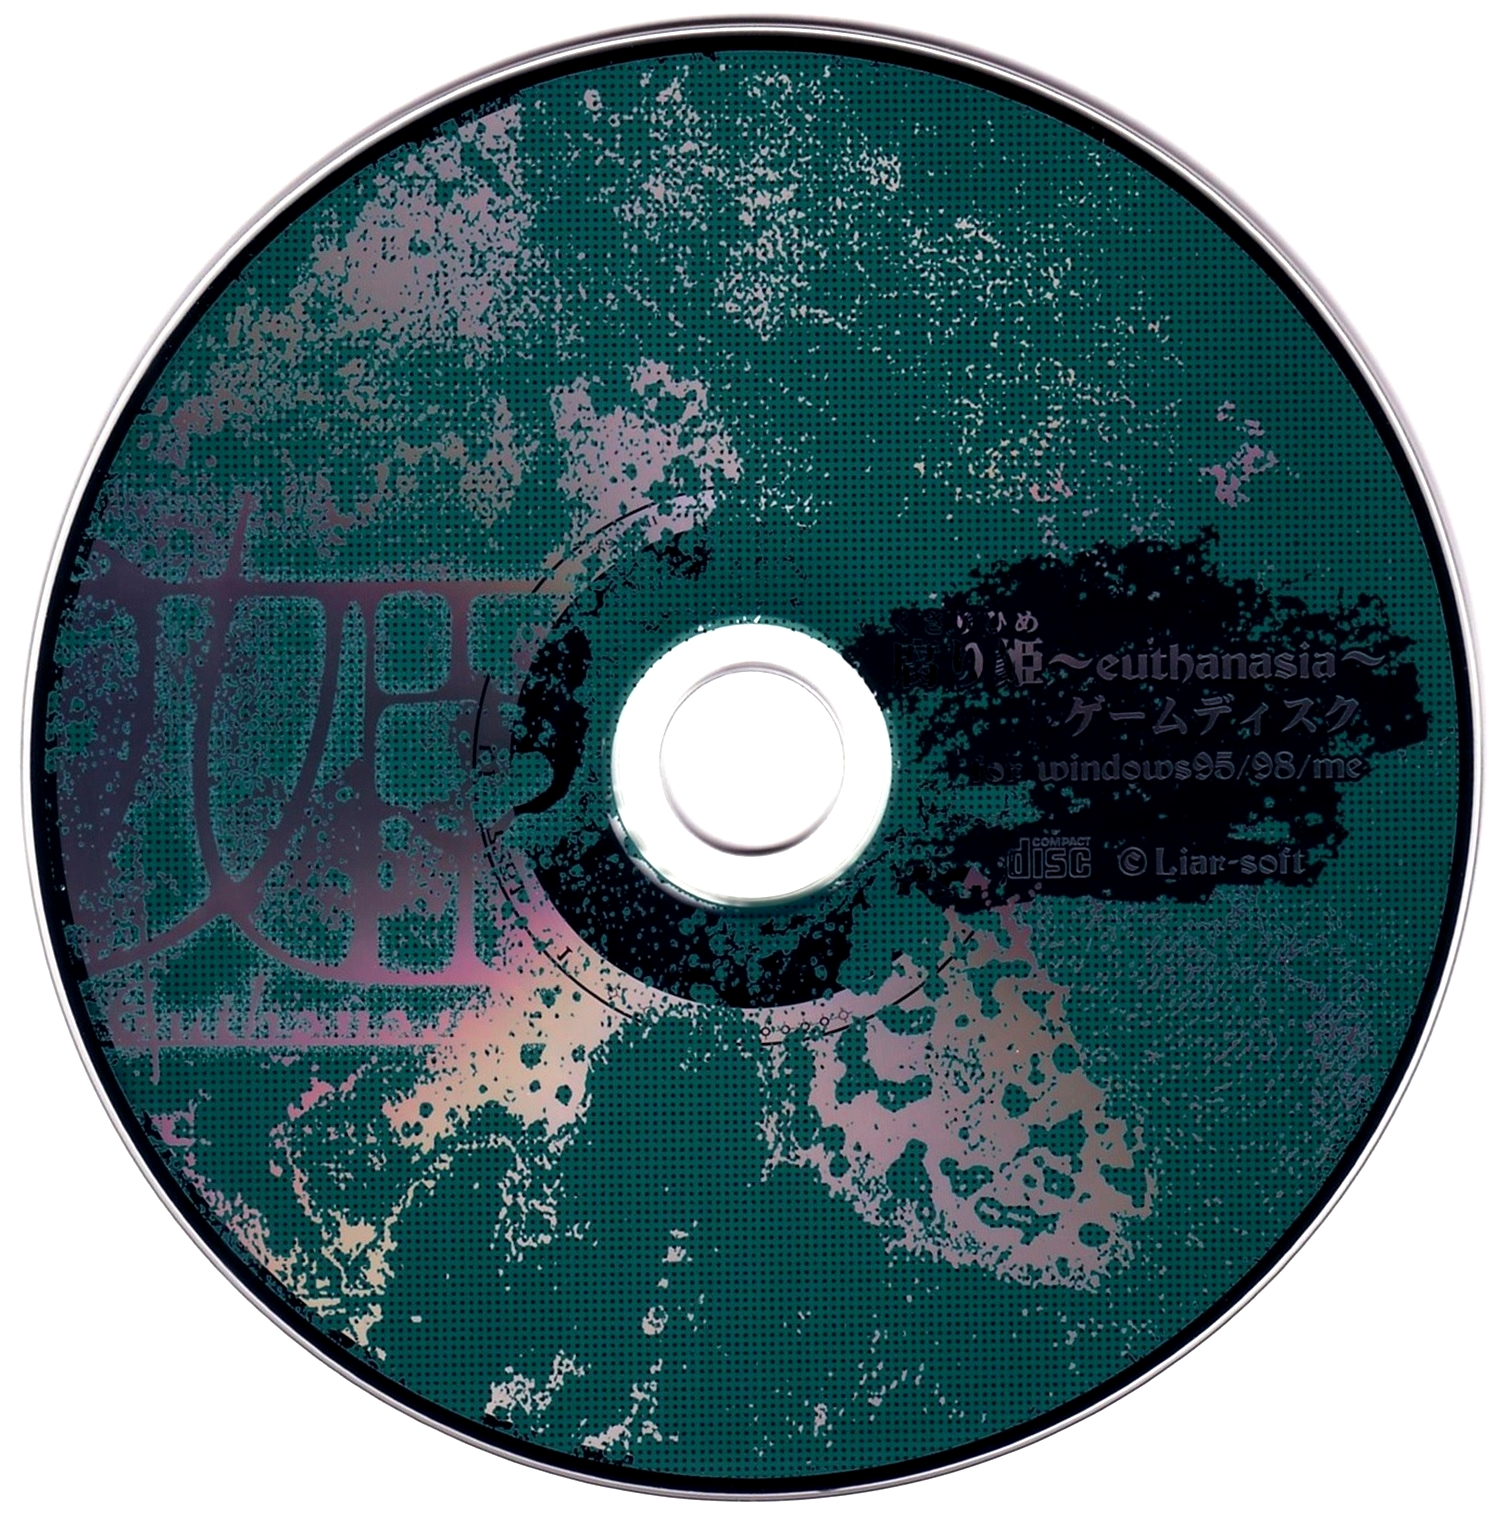 【WAV】ゲーム「腐り姫～euthanasia～」Game Disc Sound Track／ライアーソフト